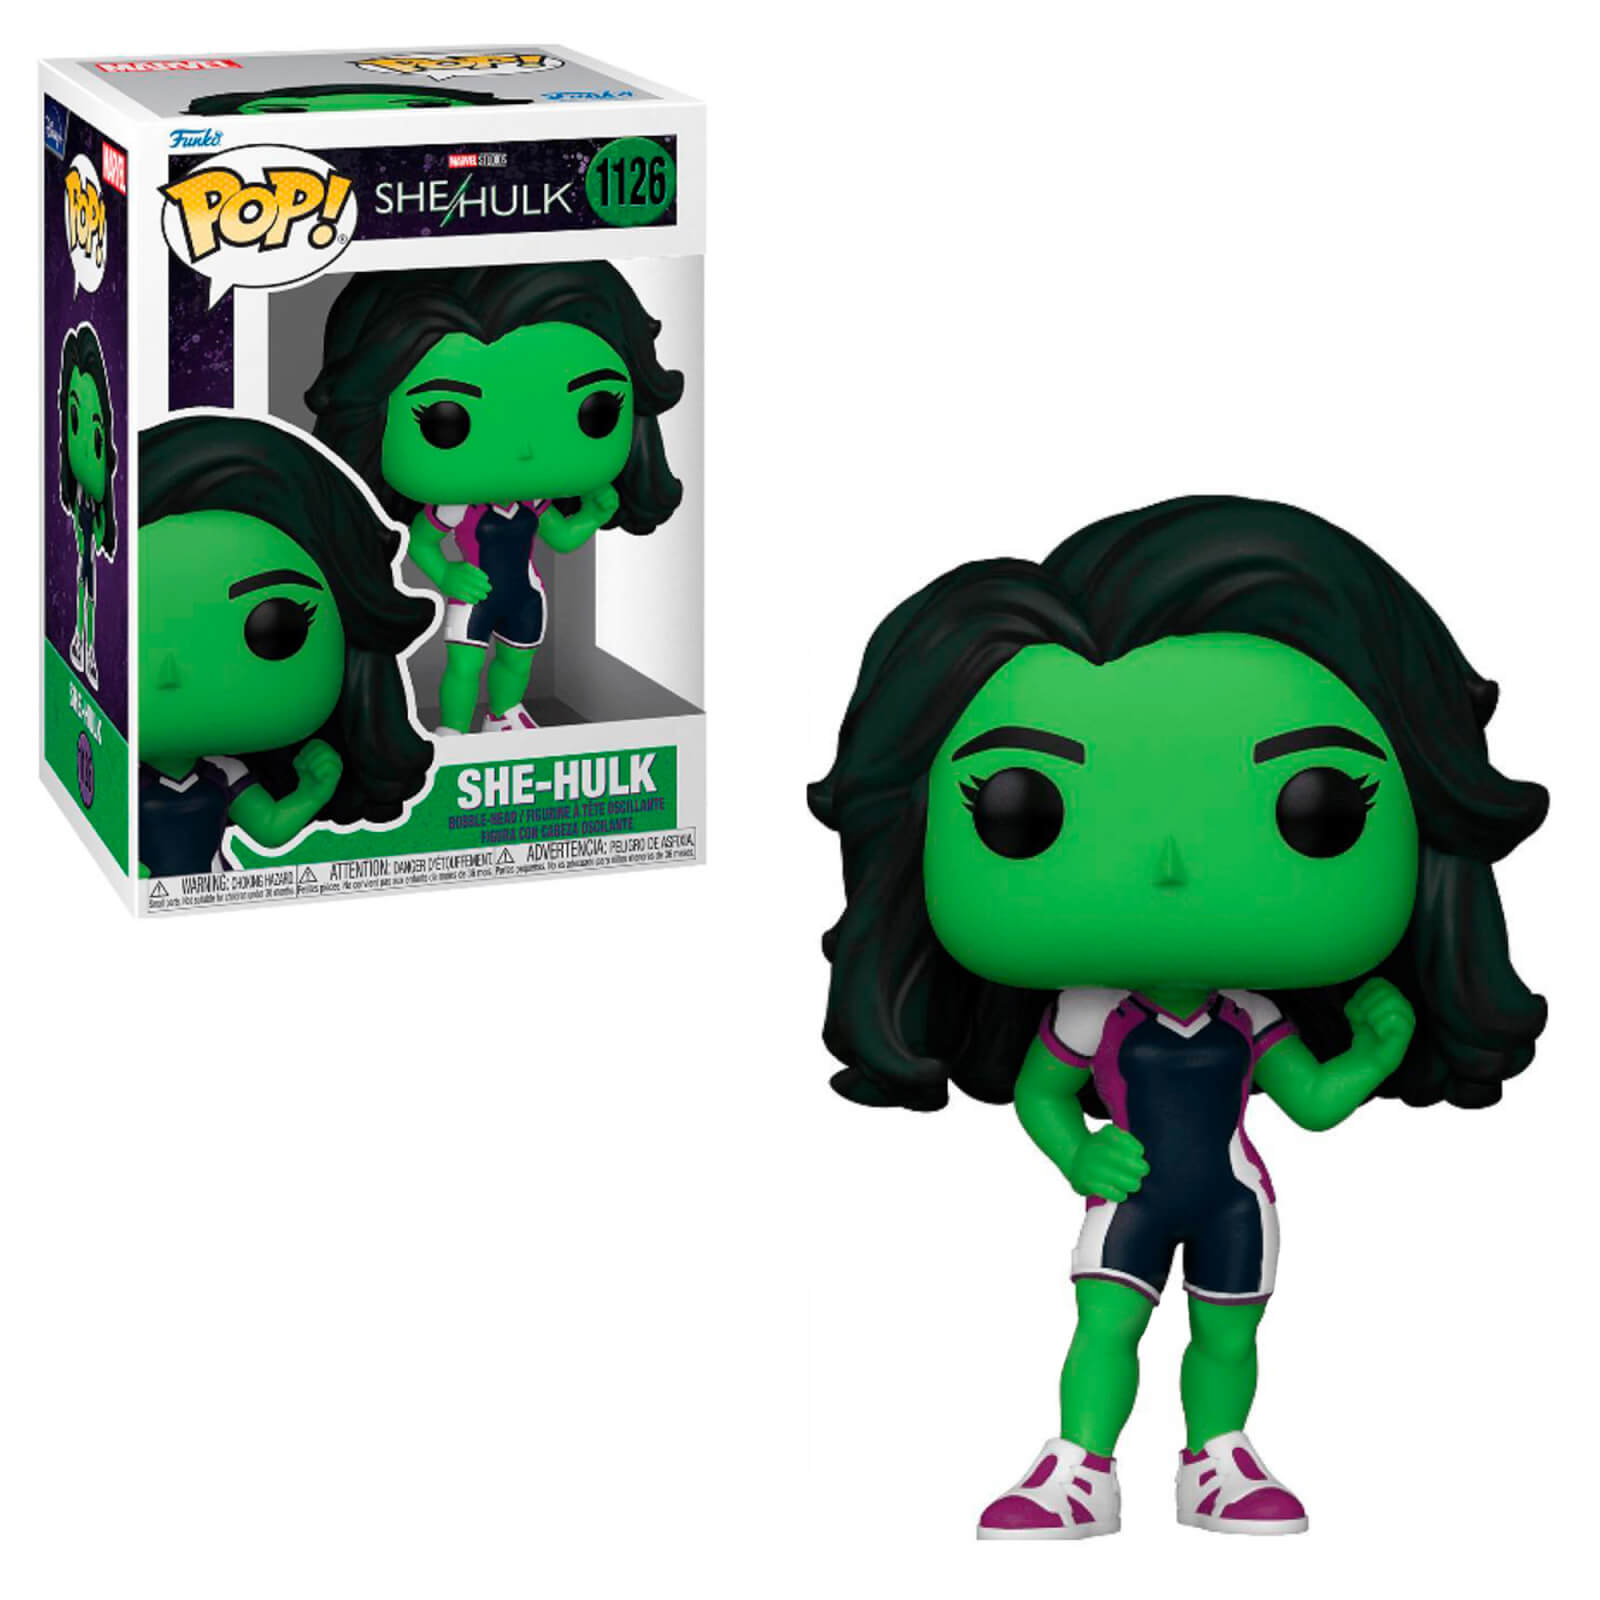 Image of Funko Pop! Marvel She-Hulk - She-Hulk Suit Vinyl Figure